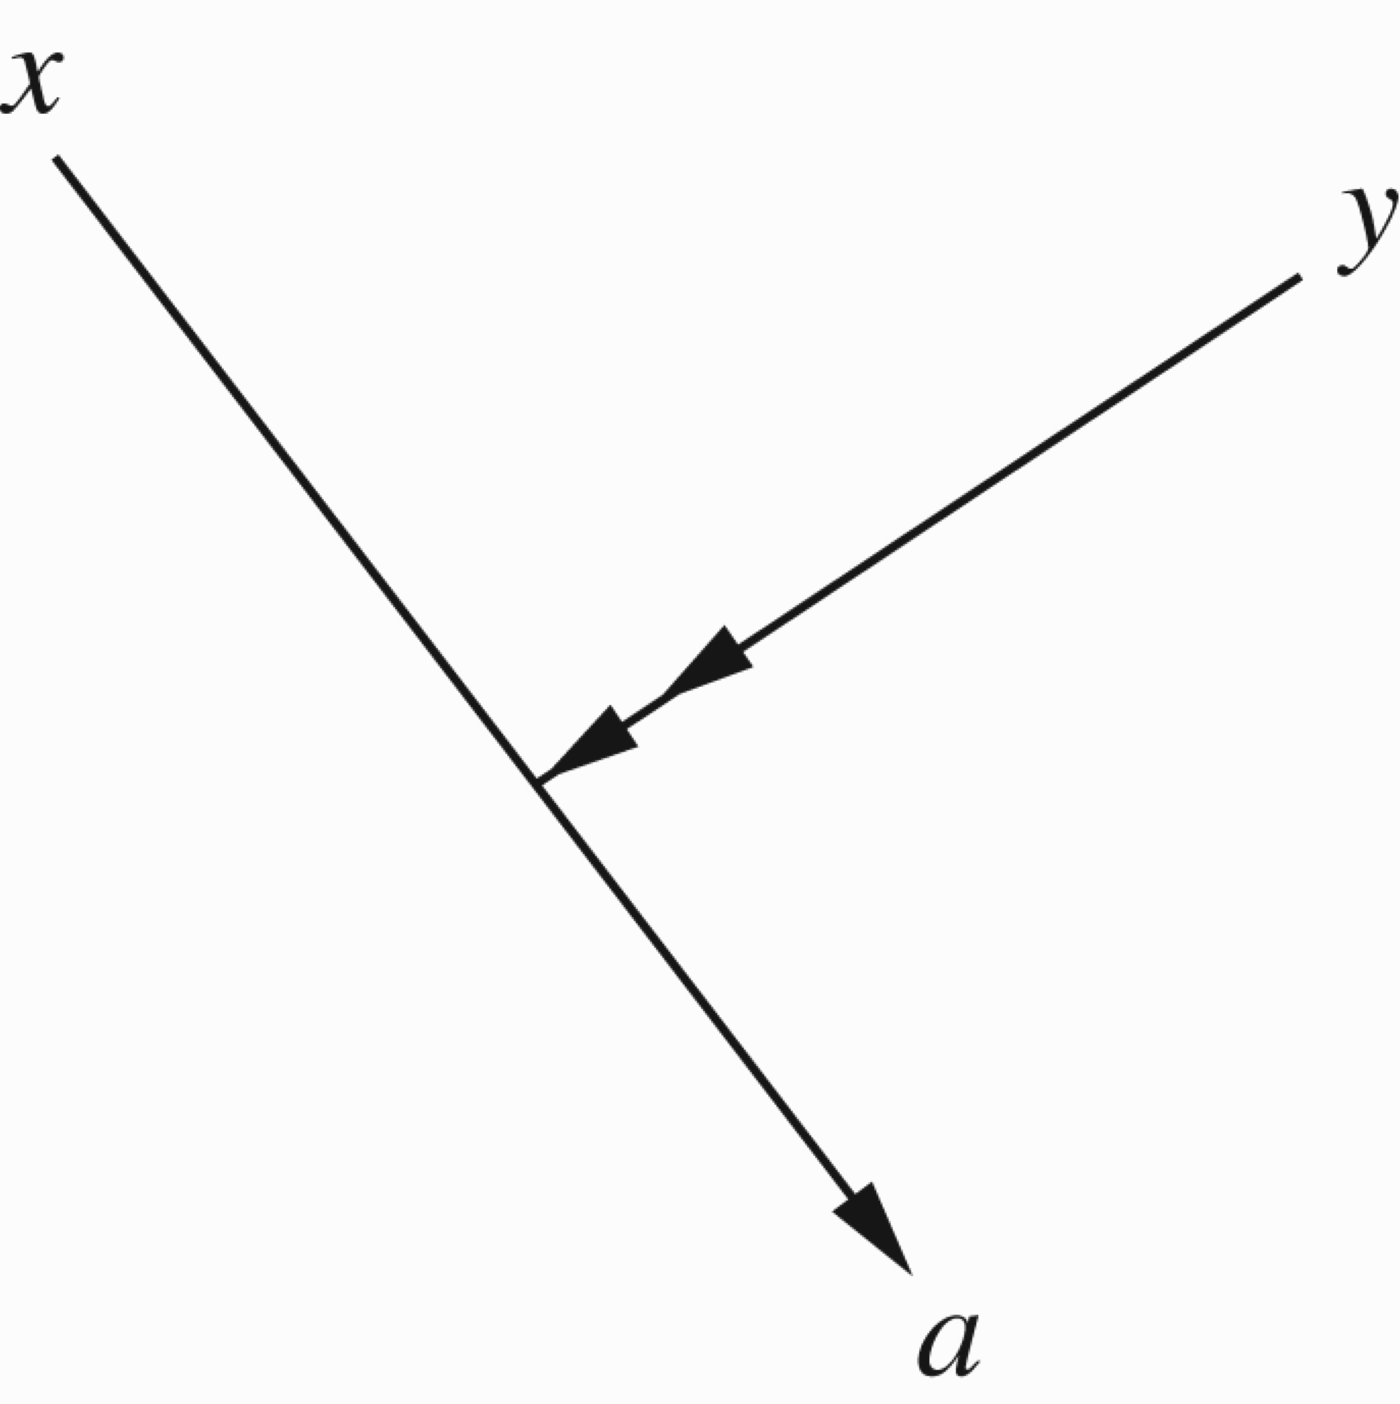 A higher level representation of Figure 17.